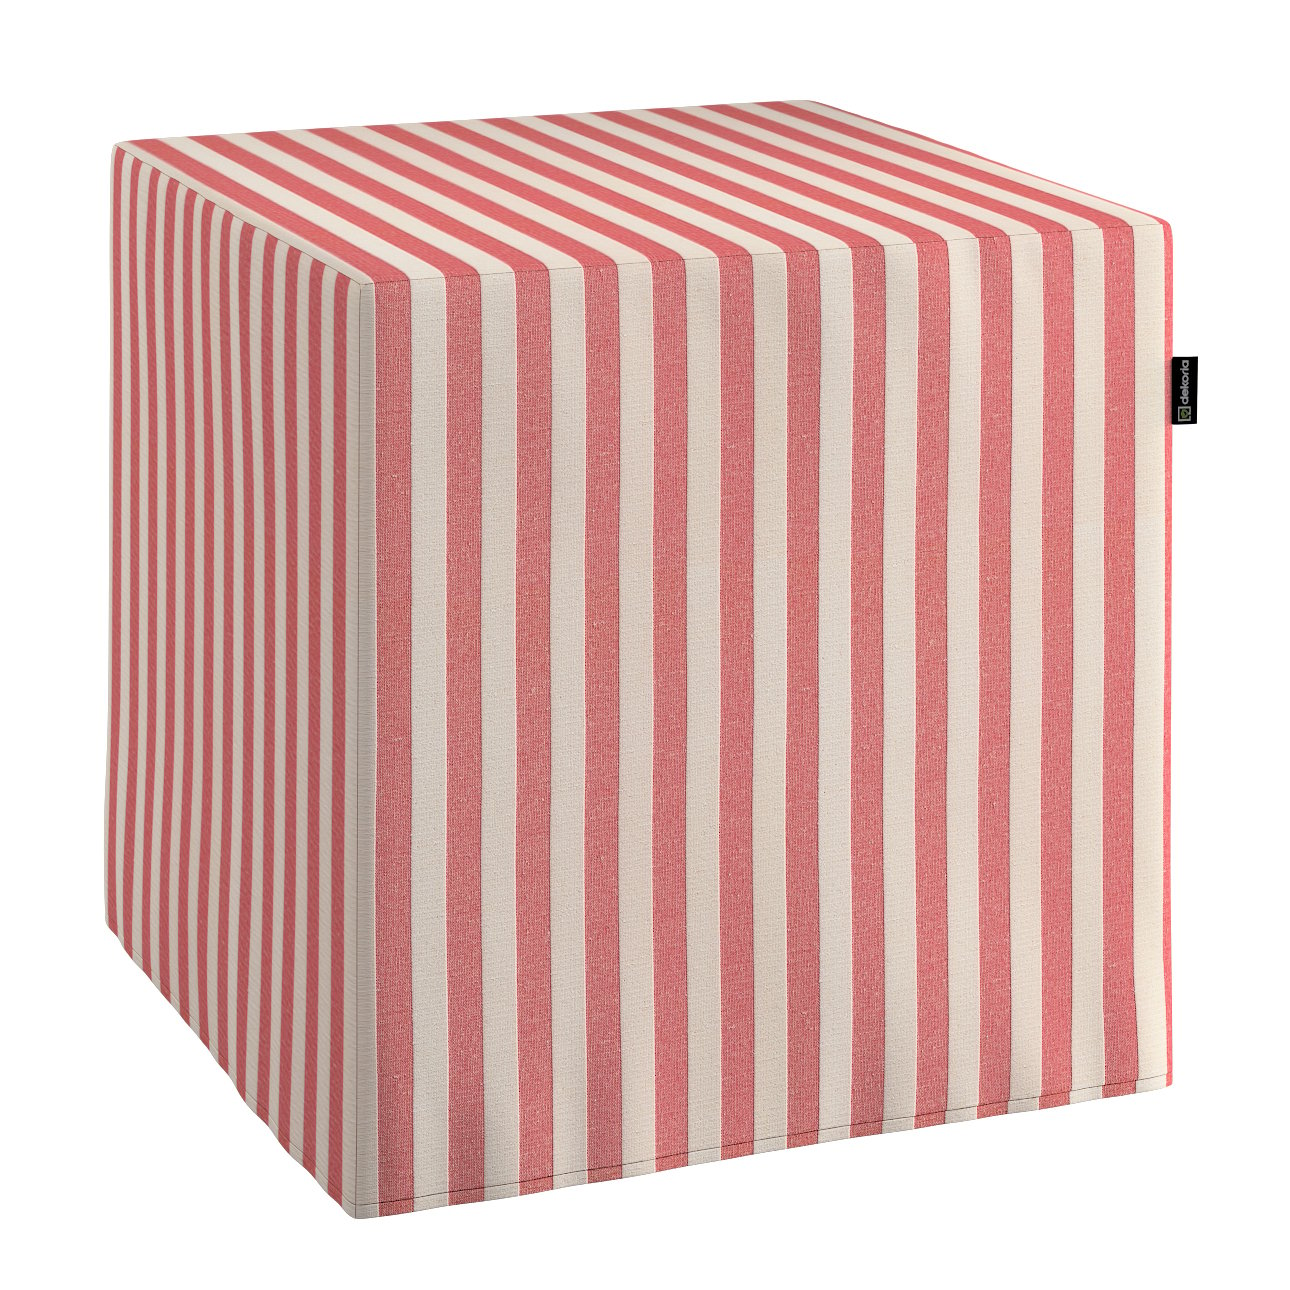 Dekoria Taburetka tvrdá, kocka, červeno-biele prúžky, 40 x 40 x 40 cm, Quadro, 136-17